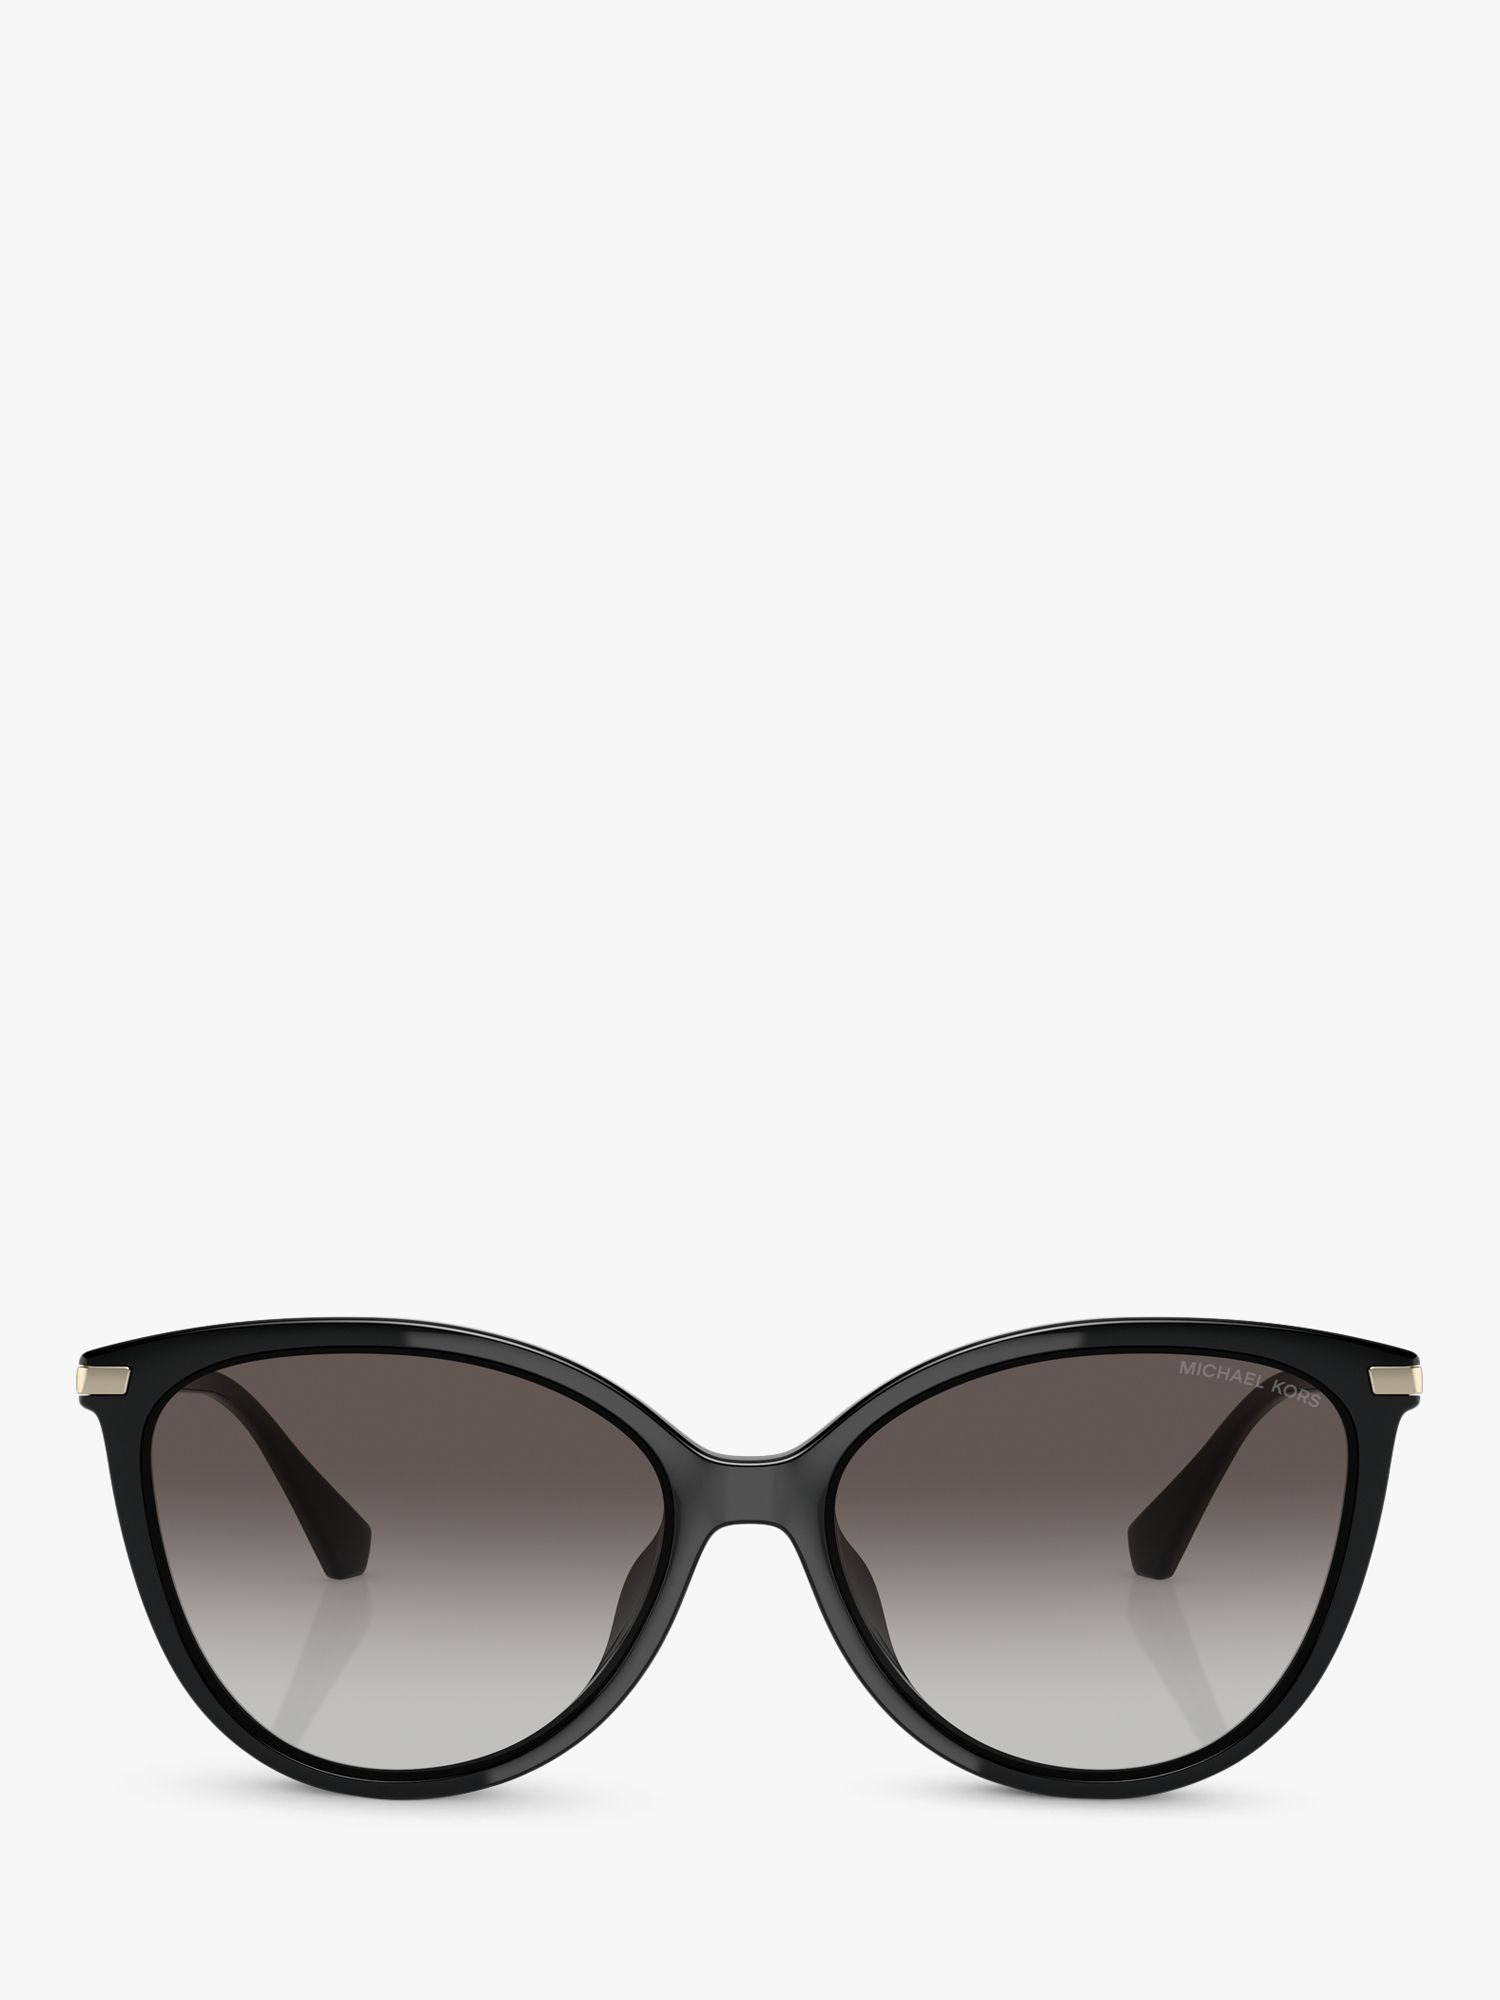 Buy Michael Kors MK2184U Women's Dupont Butterfly Sunglasses, Black/Grey Gradient Online at johnlewis.com